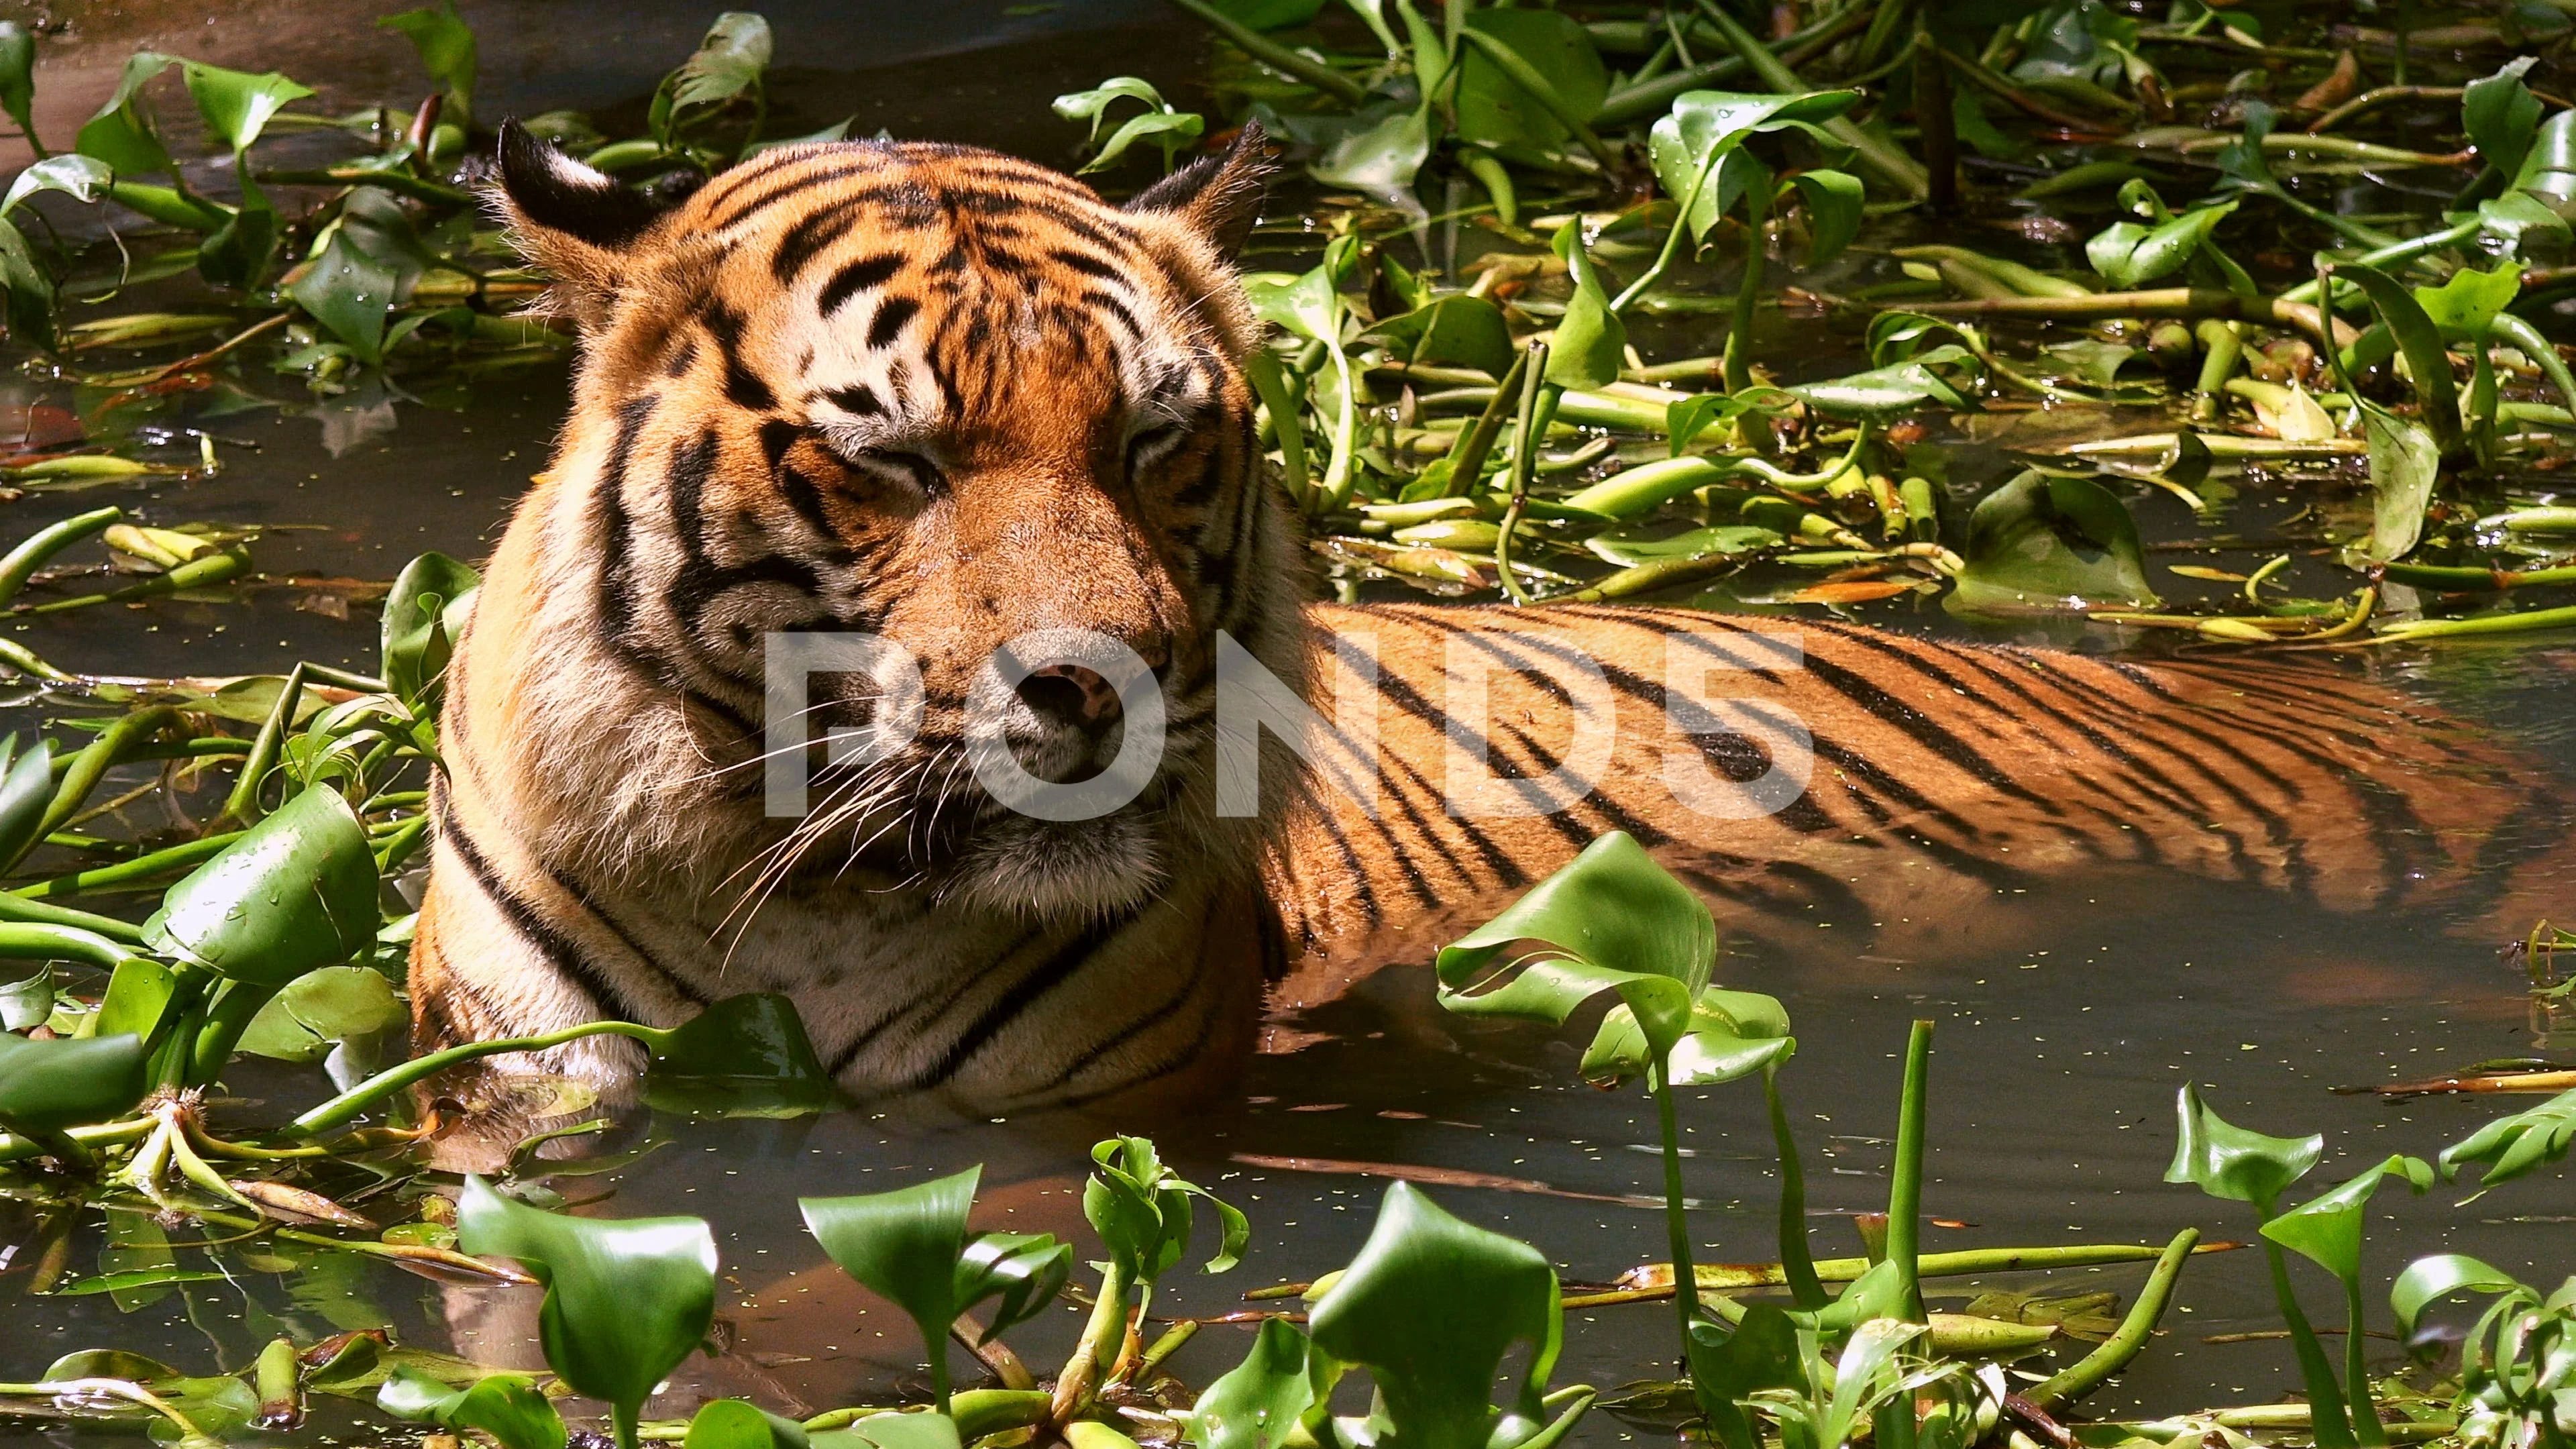 Bengal Tiger  Rainforest Animals